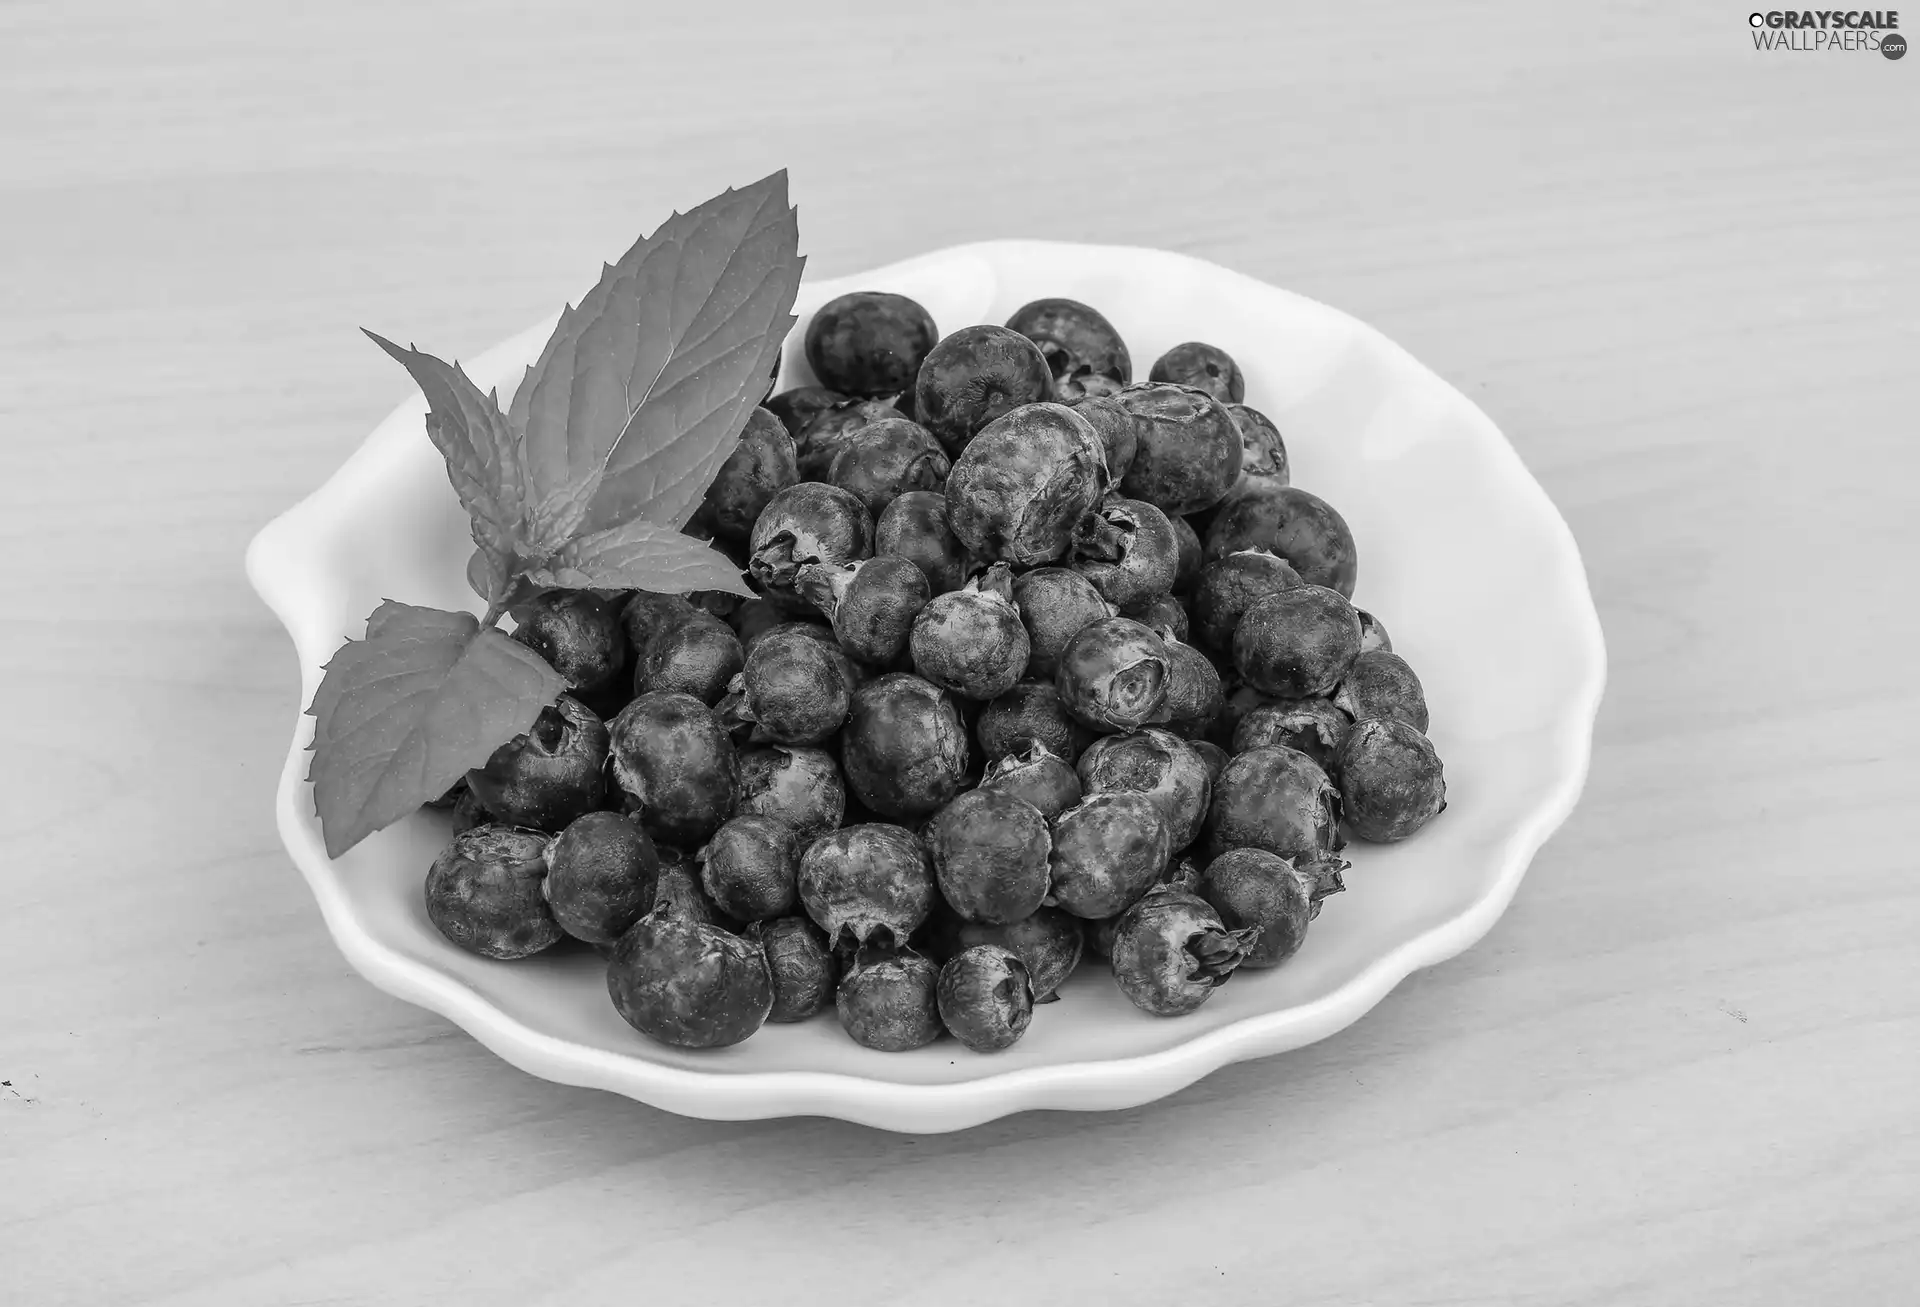 leaves, blueberries, plate